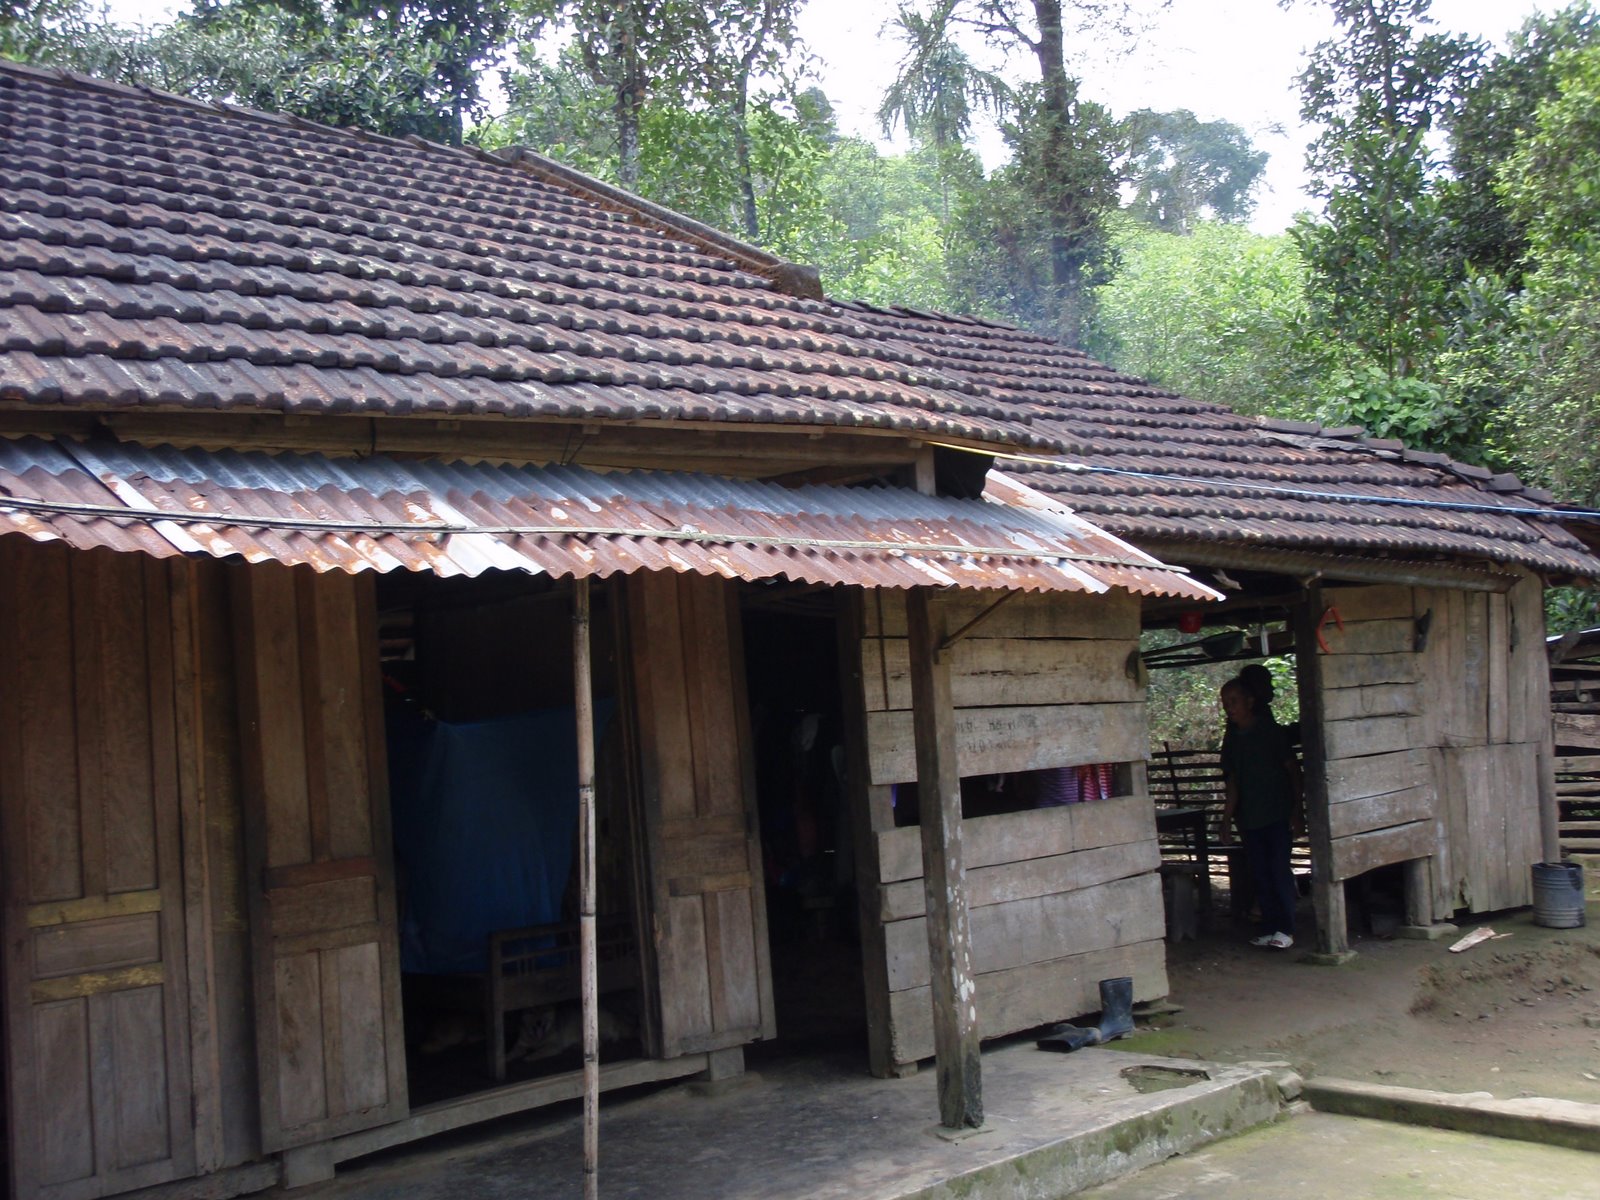 Thien Nhan's birthplace